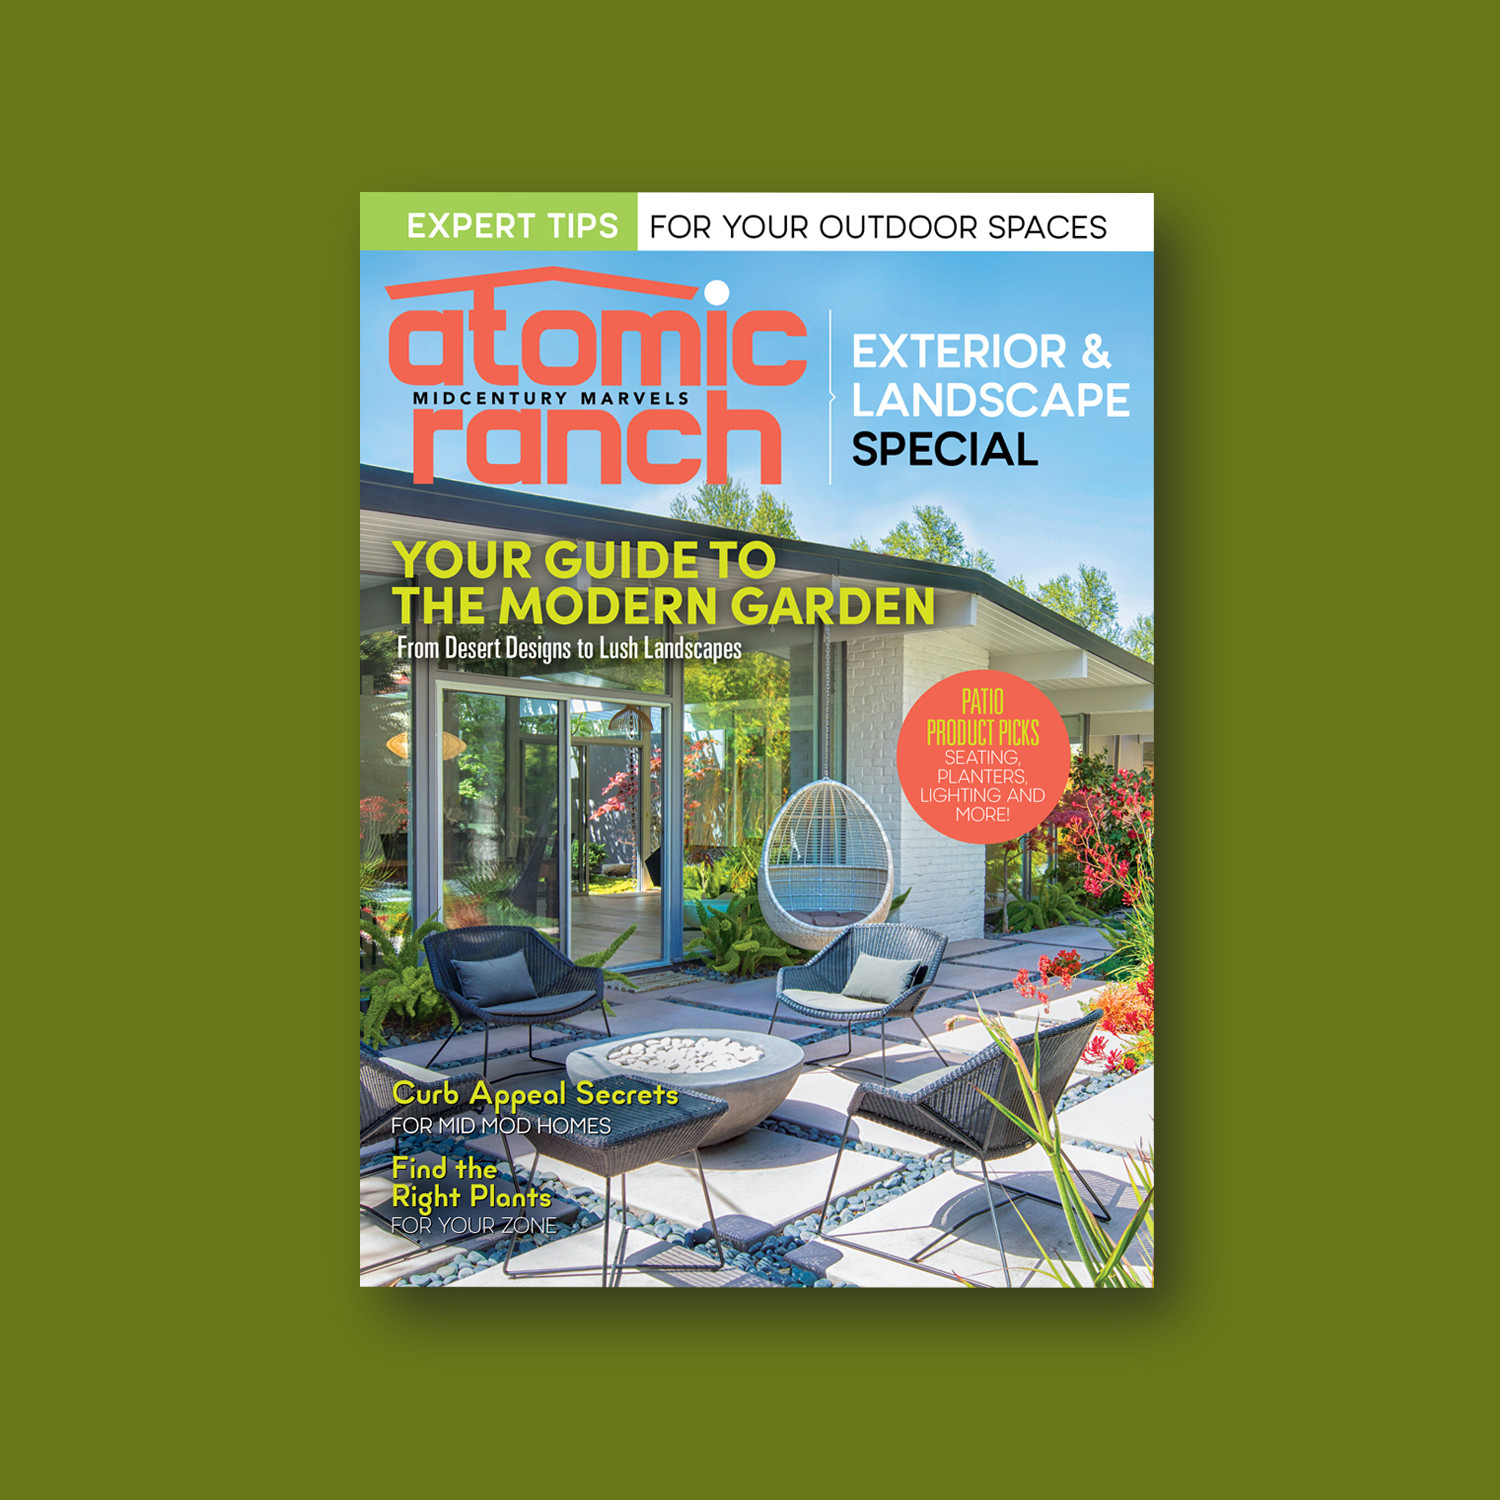 Atomic Ranch - "Inspired Design" (2020)